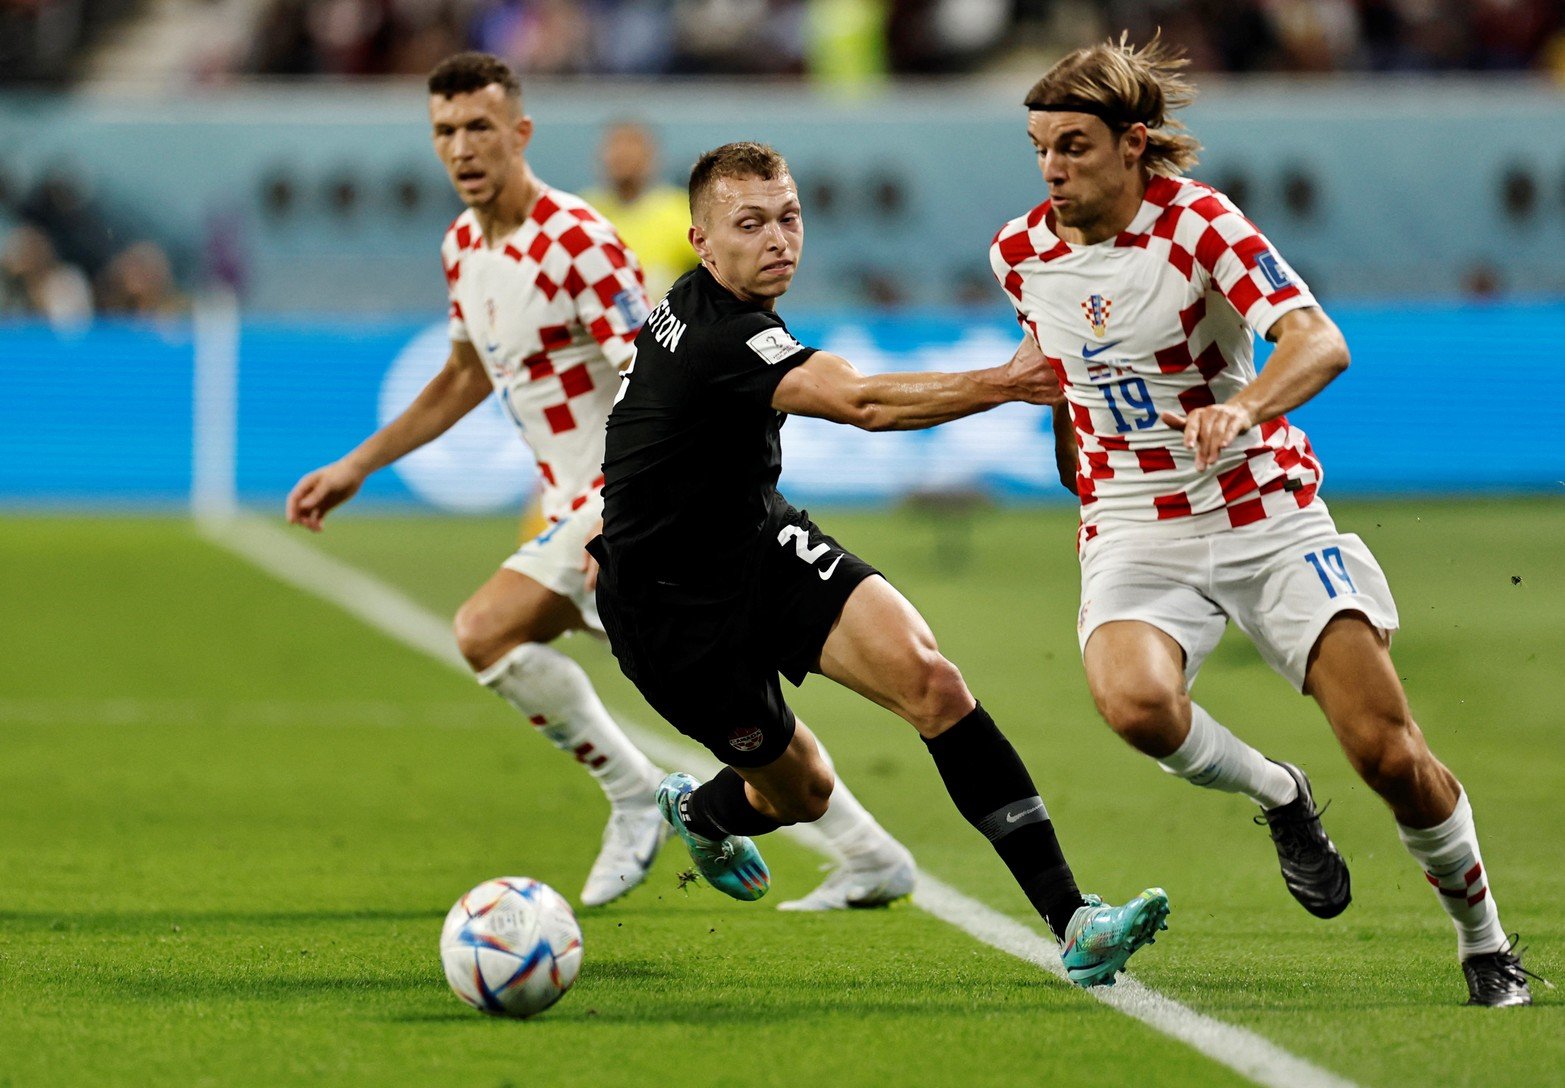 En el Grupo F, Croacia goleó 4 a 1 a Canadá y aumentó sus chances de clasificar a octavos de final.